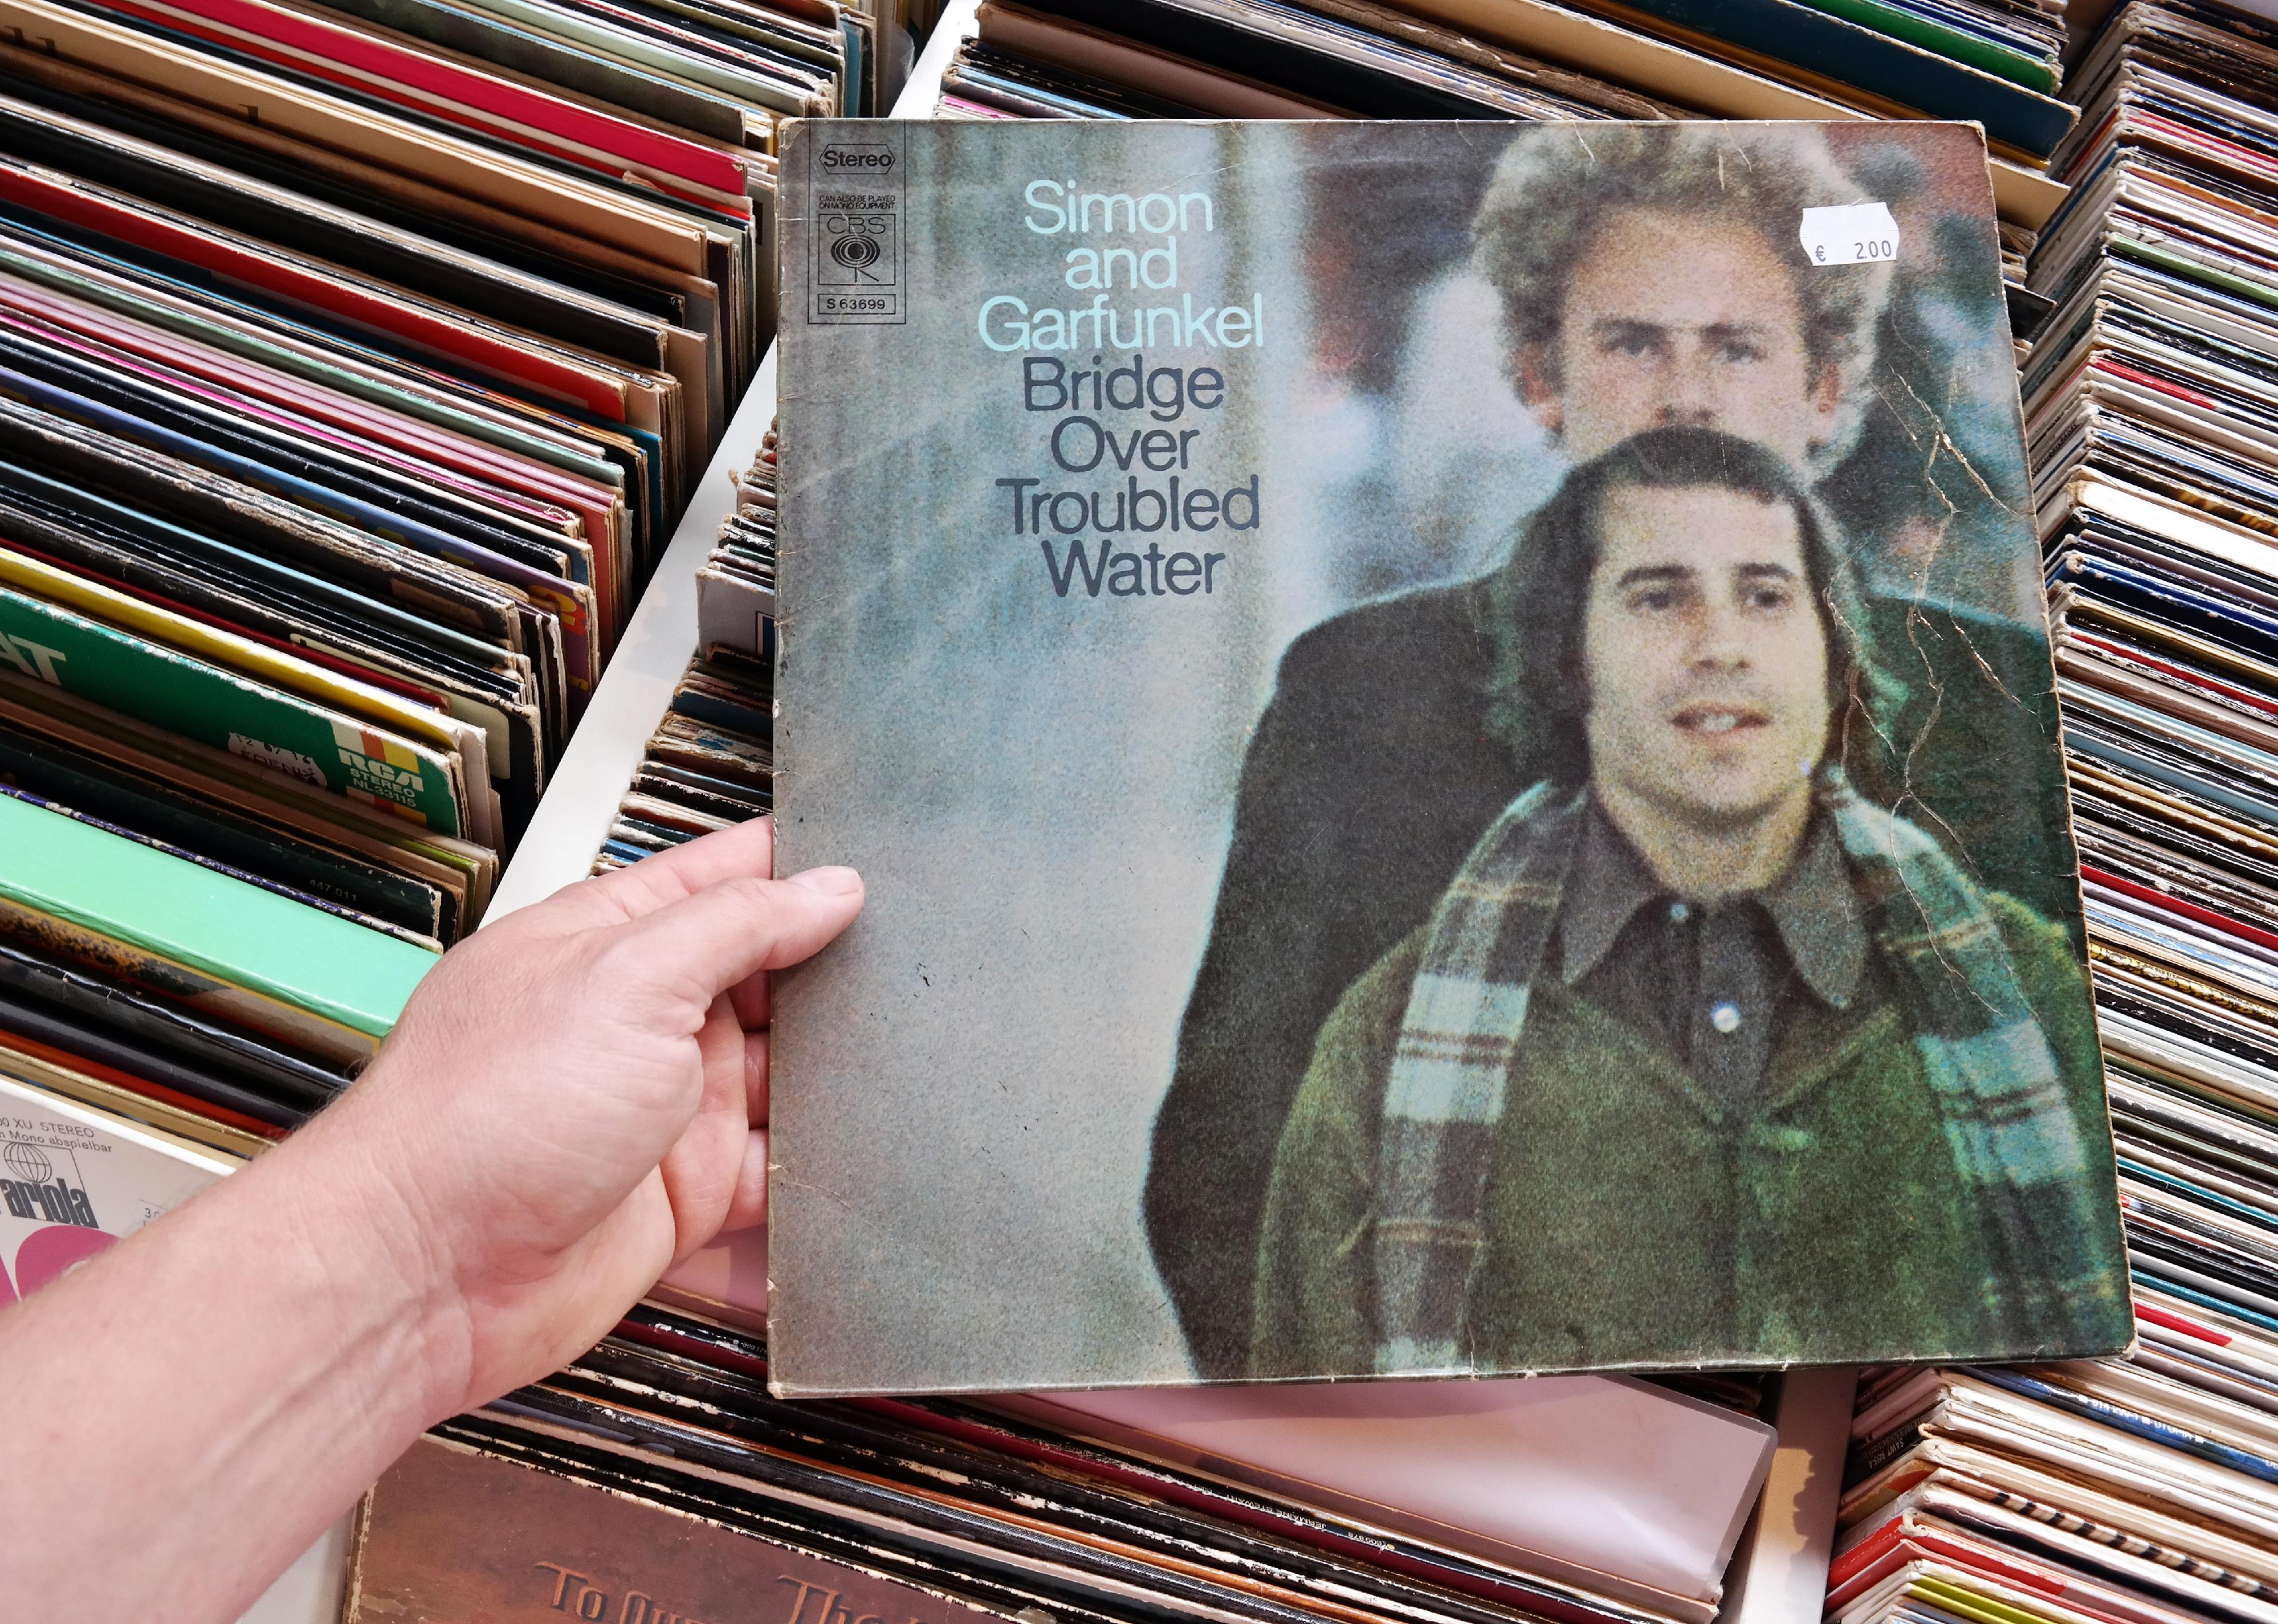 A record of Simon & Garfunkel.